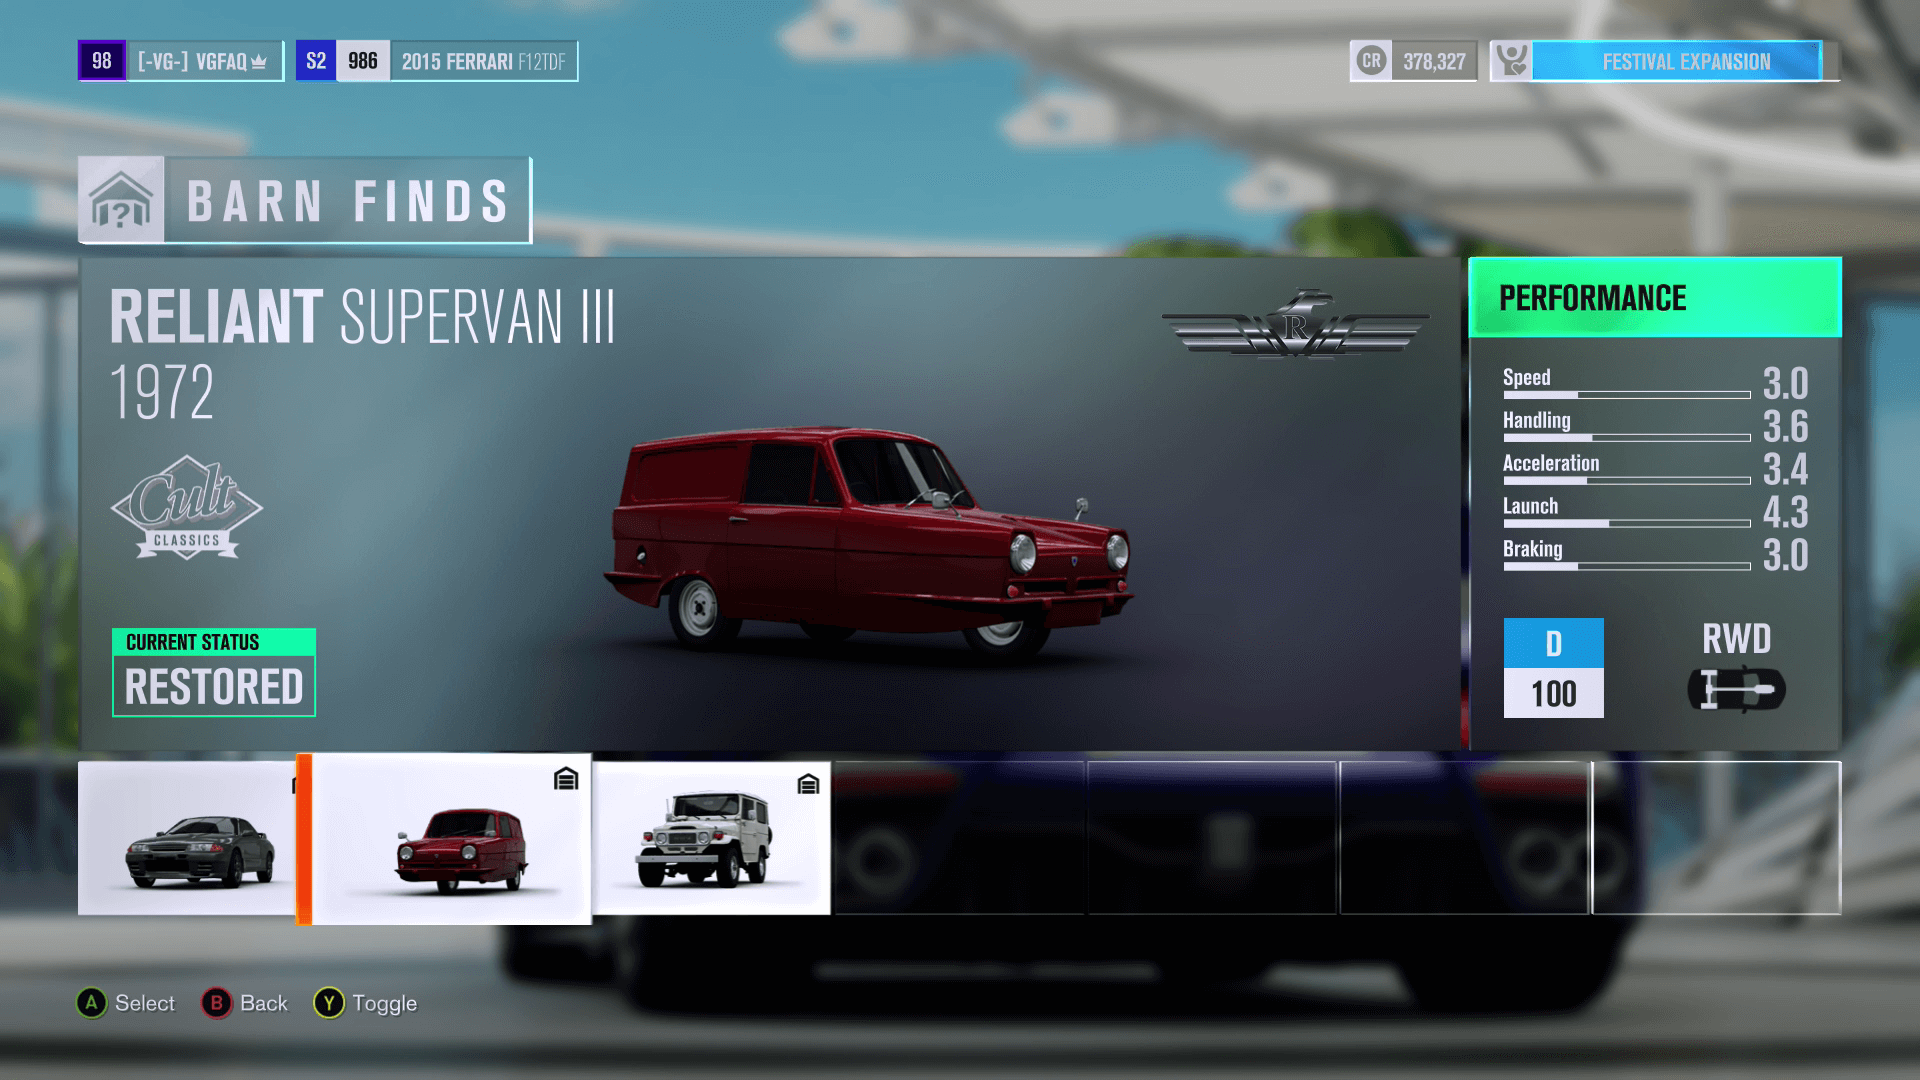 Reliant Supervan III Coming To Forza Horizon 3